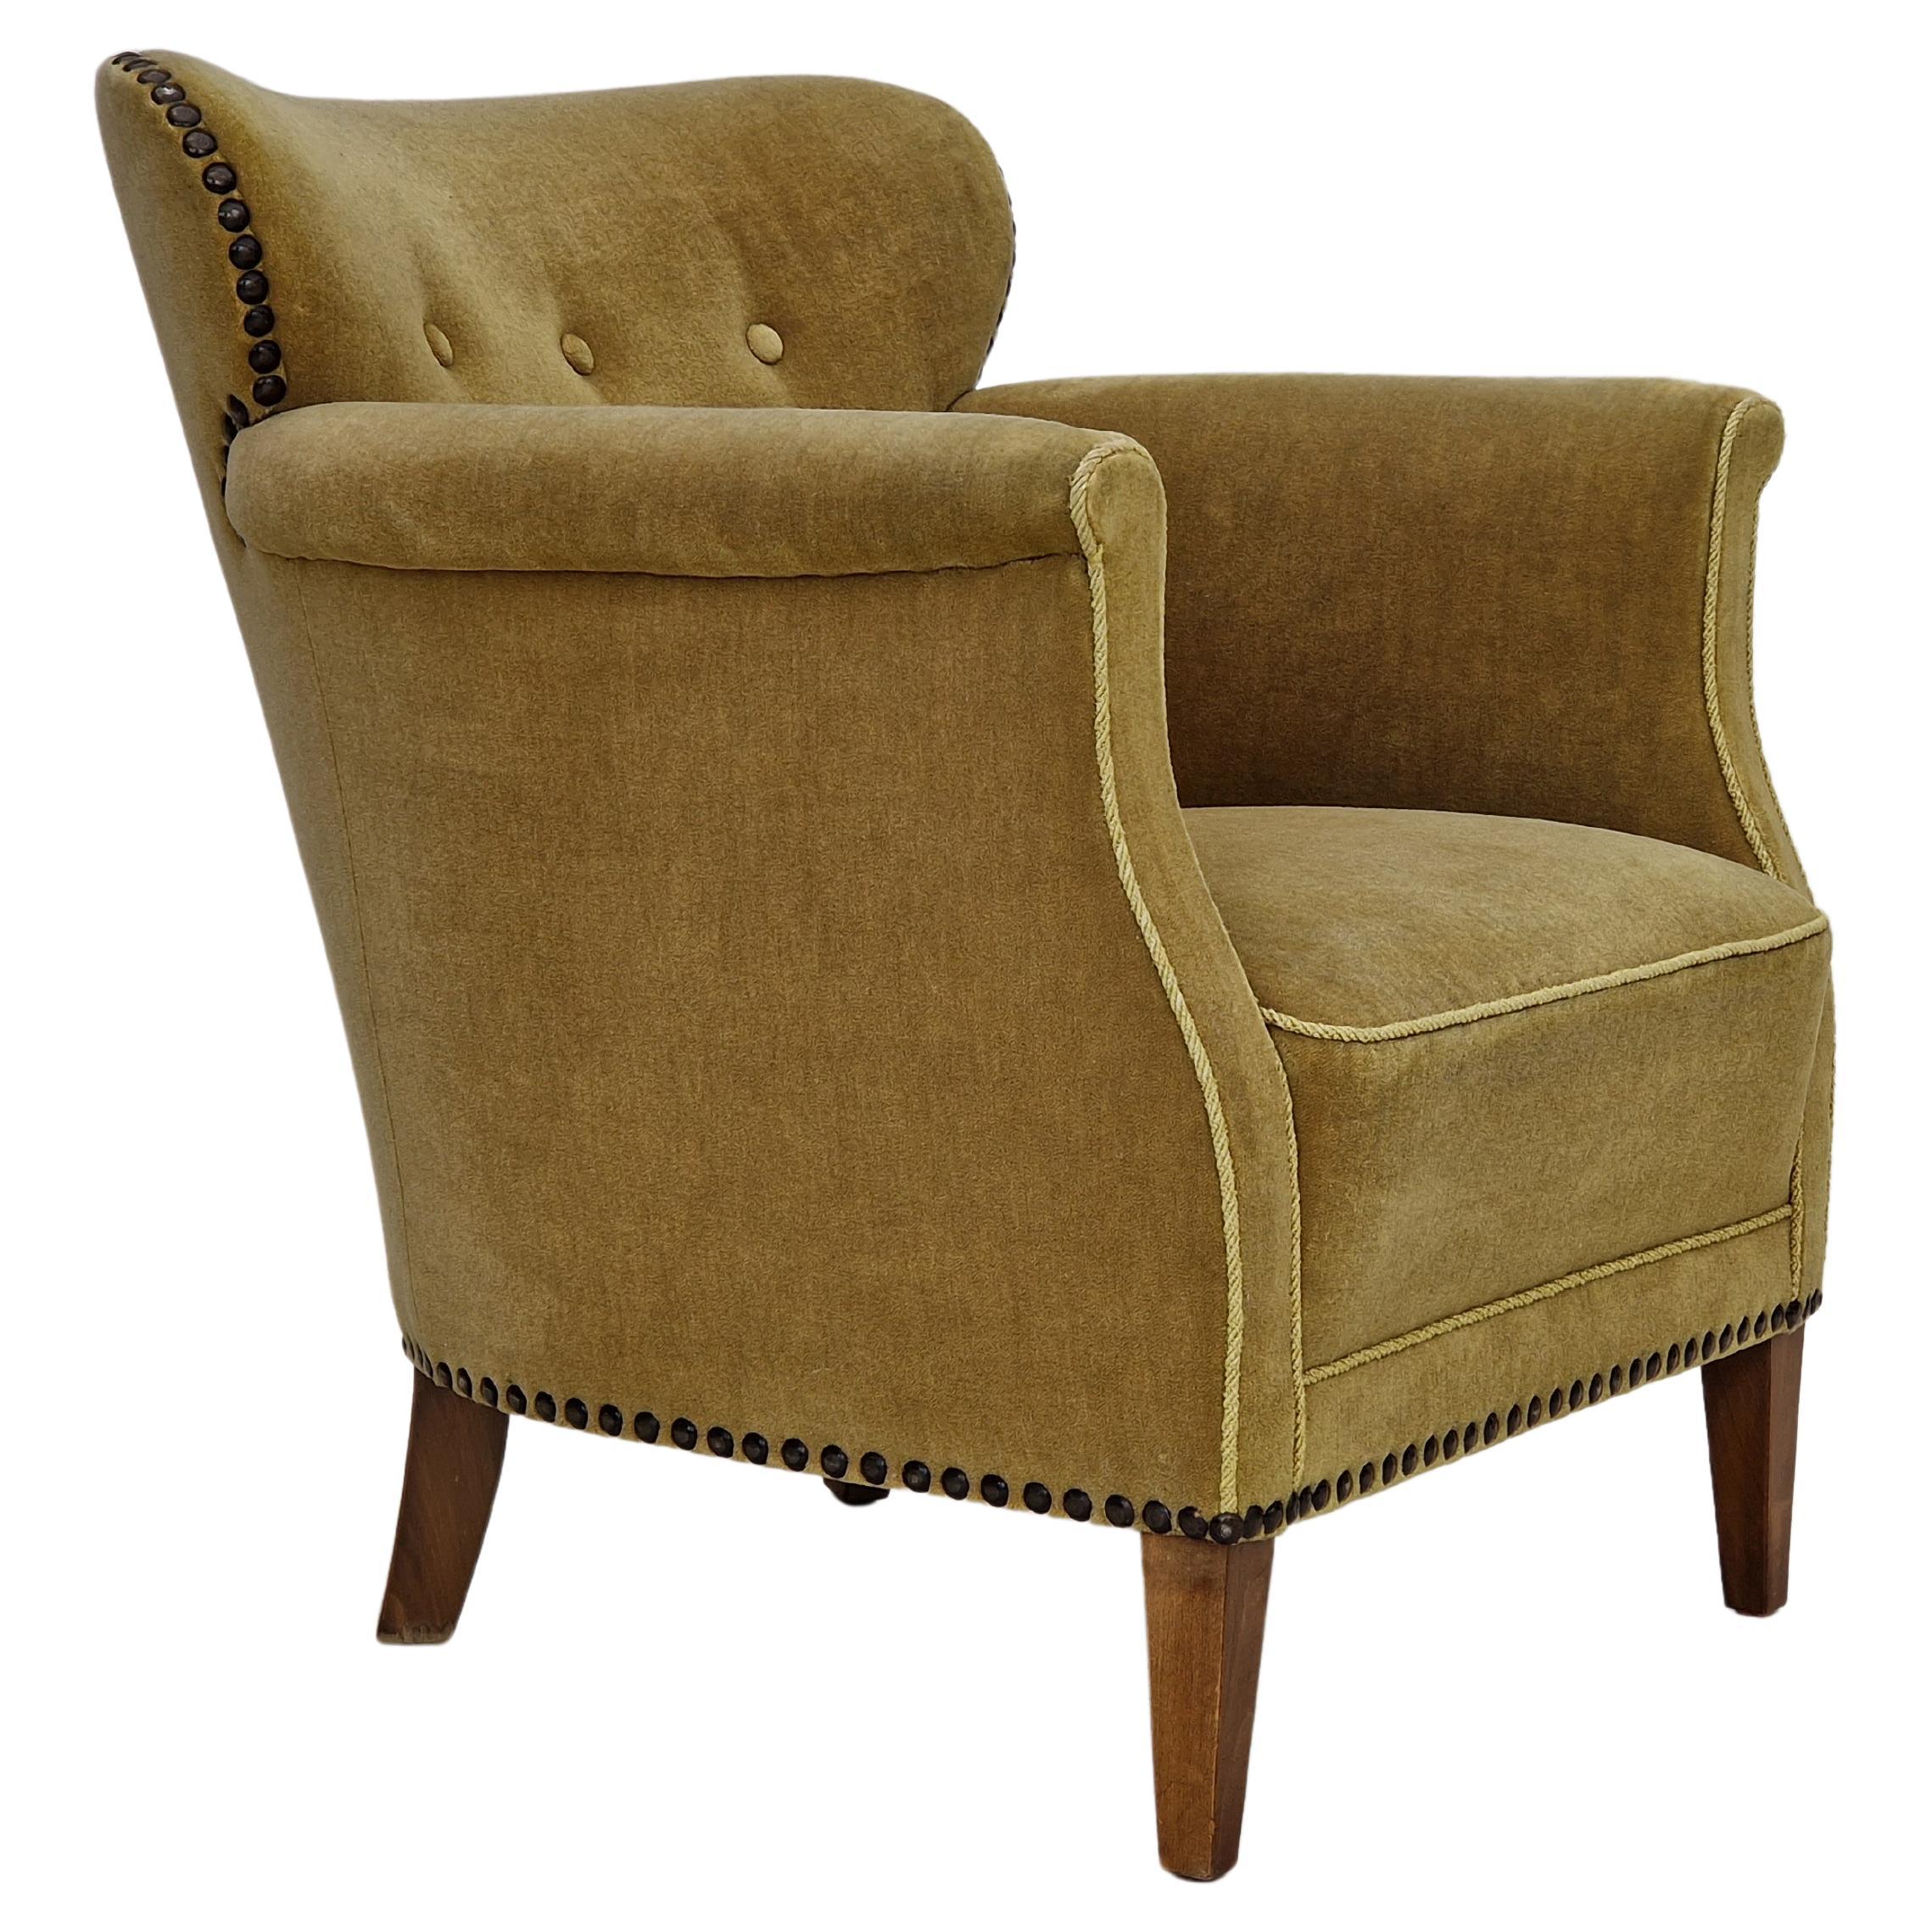 1960s, Danish Lounge Chair, Original Very Good Condition